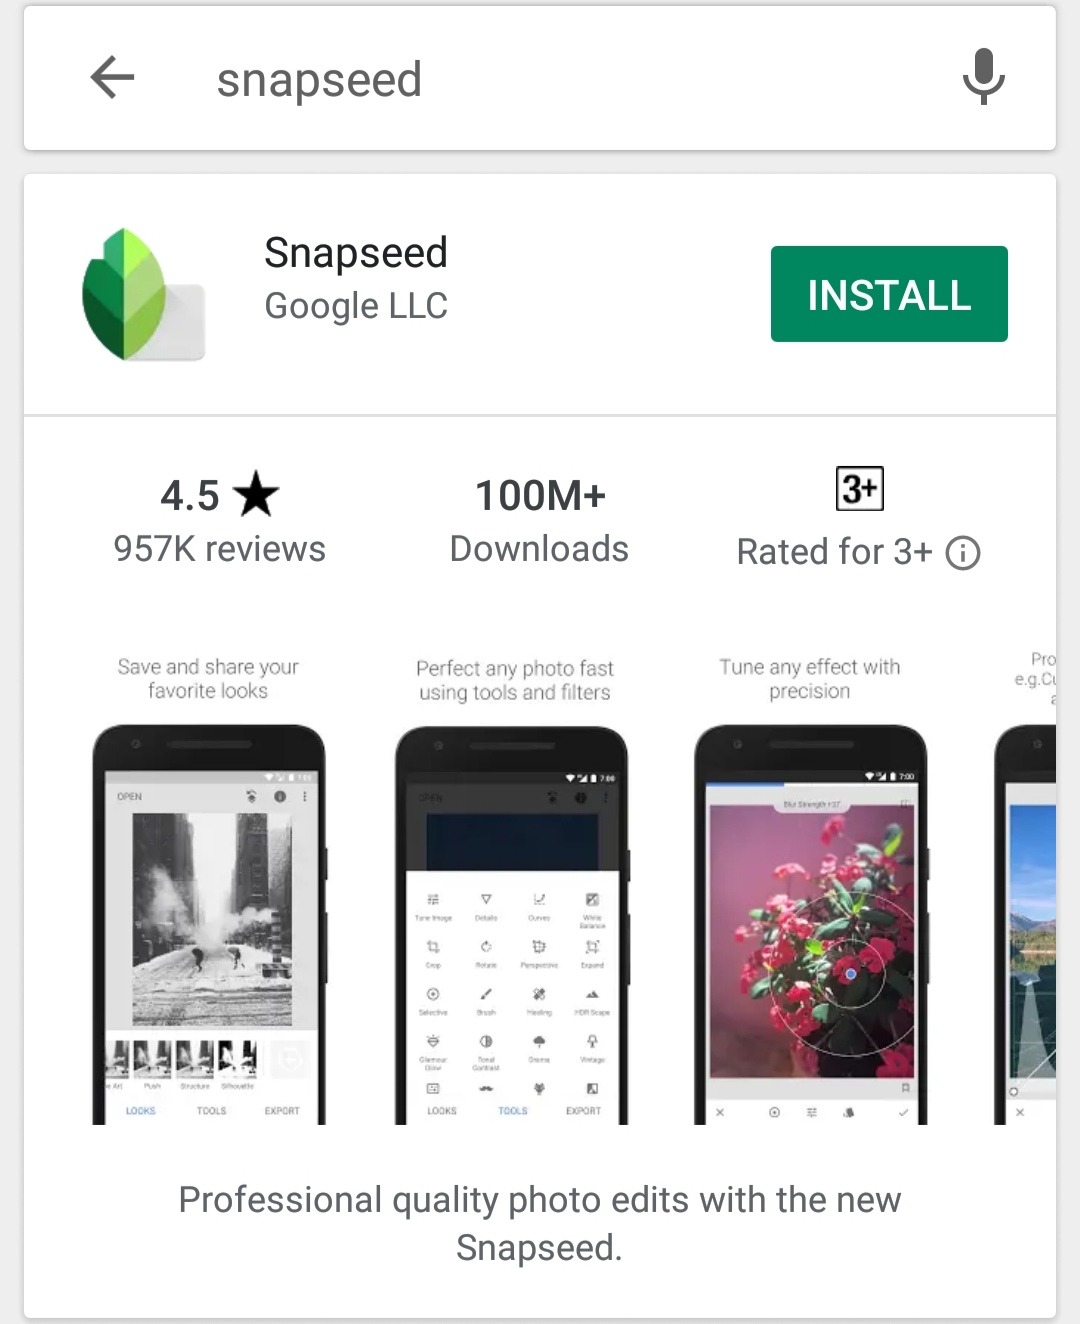 google snapseed